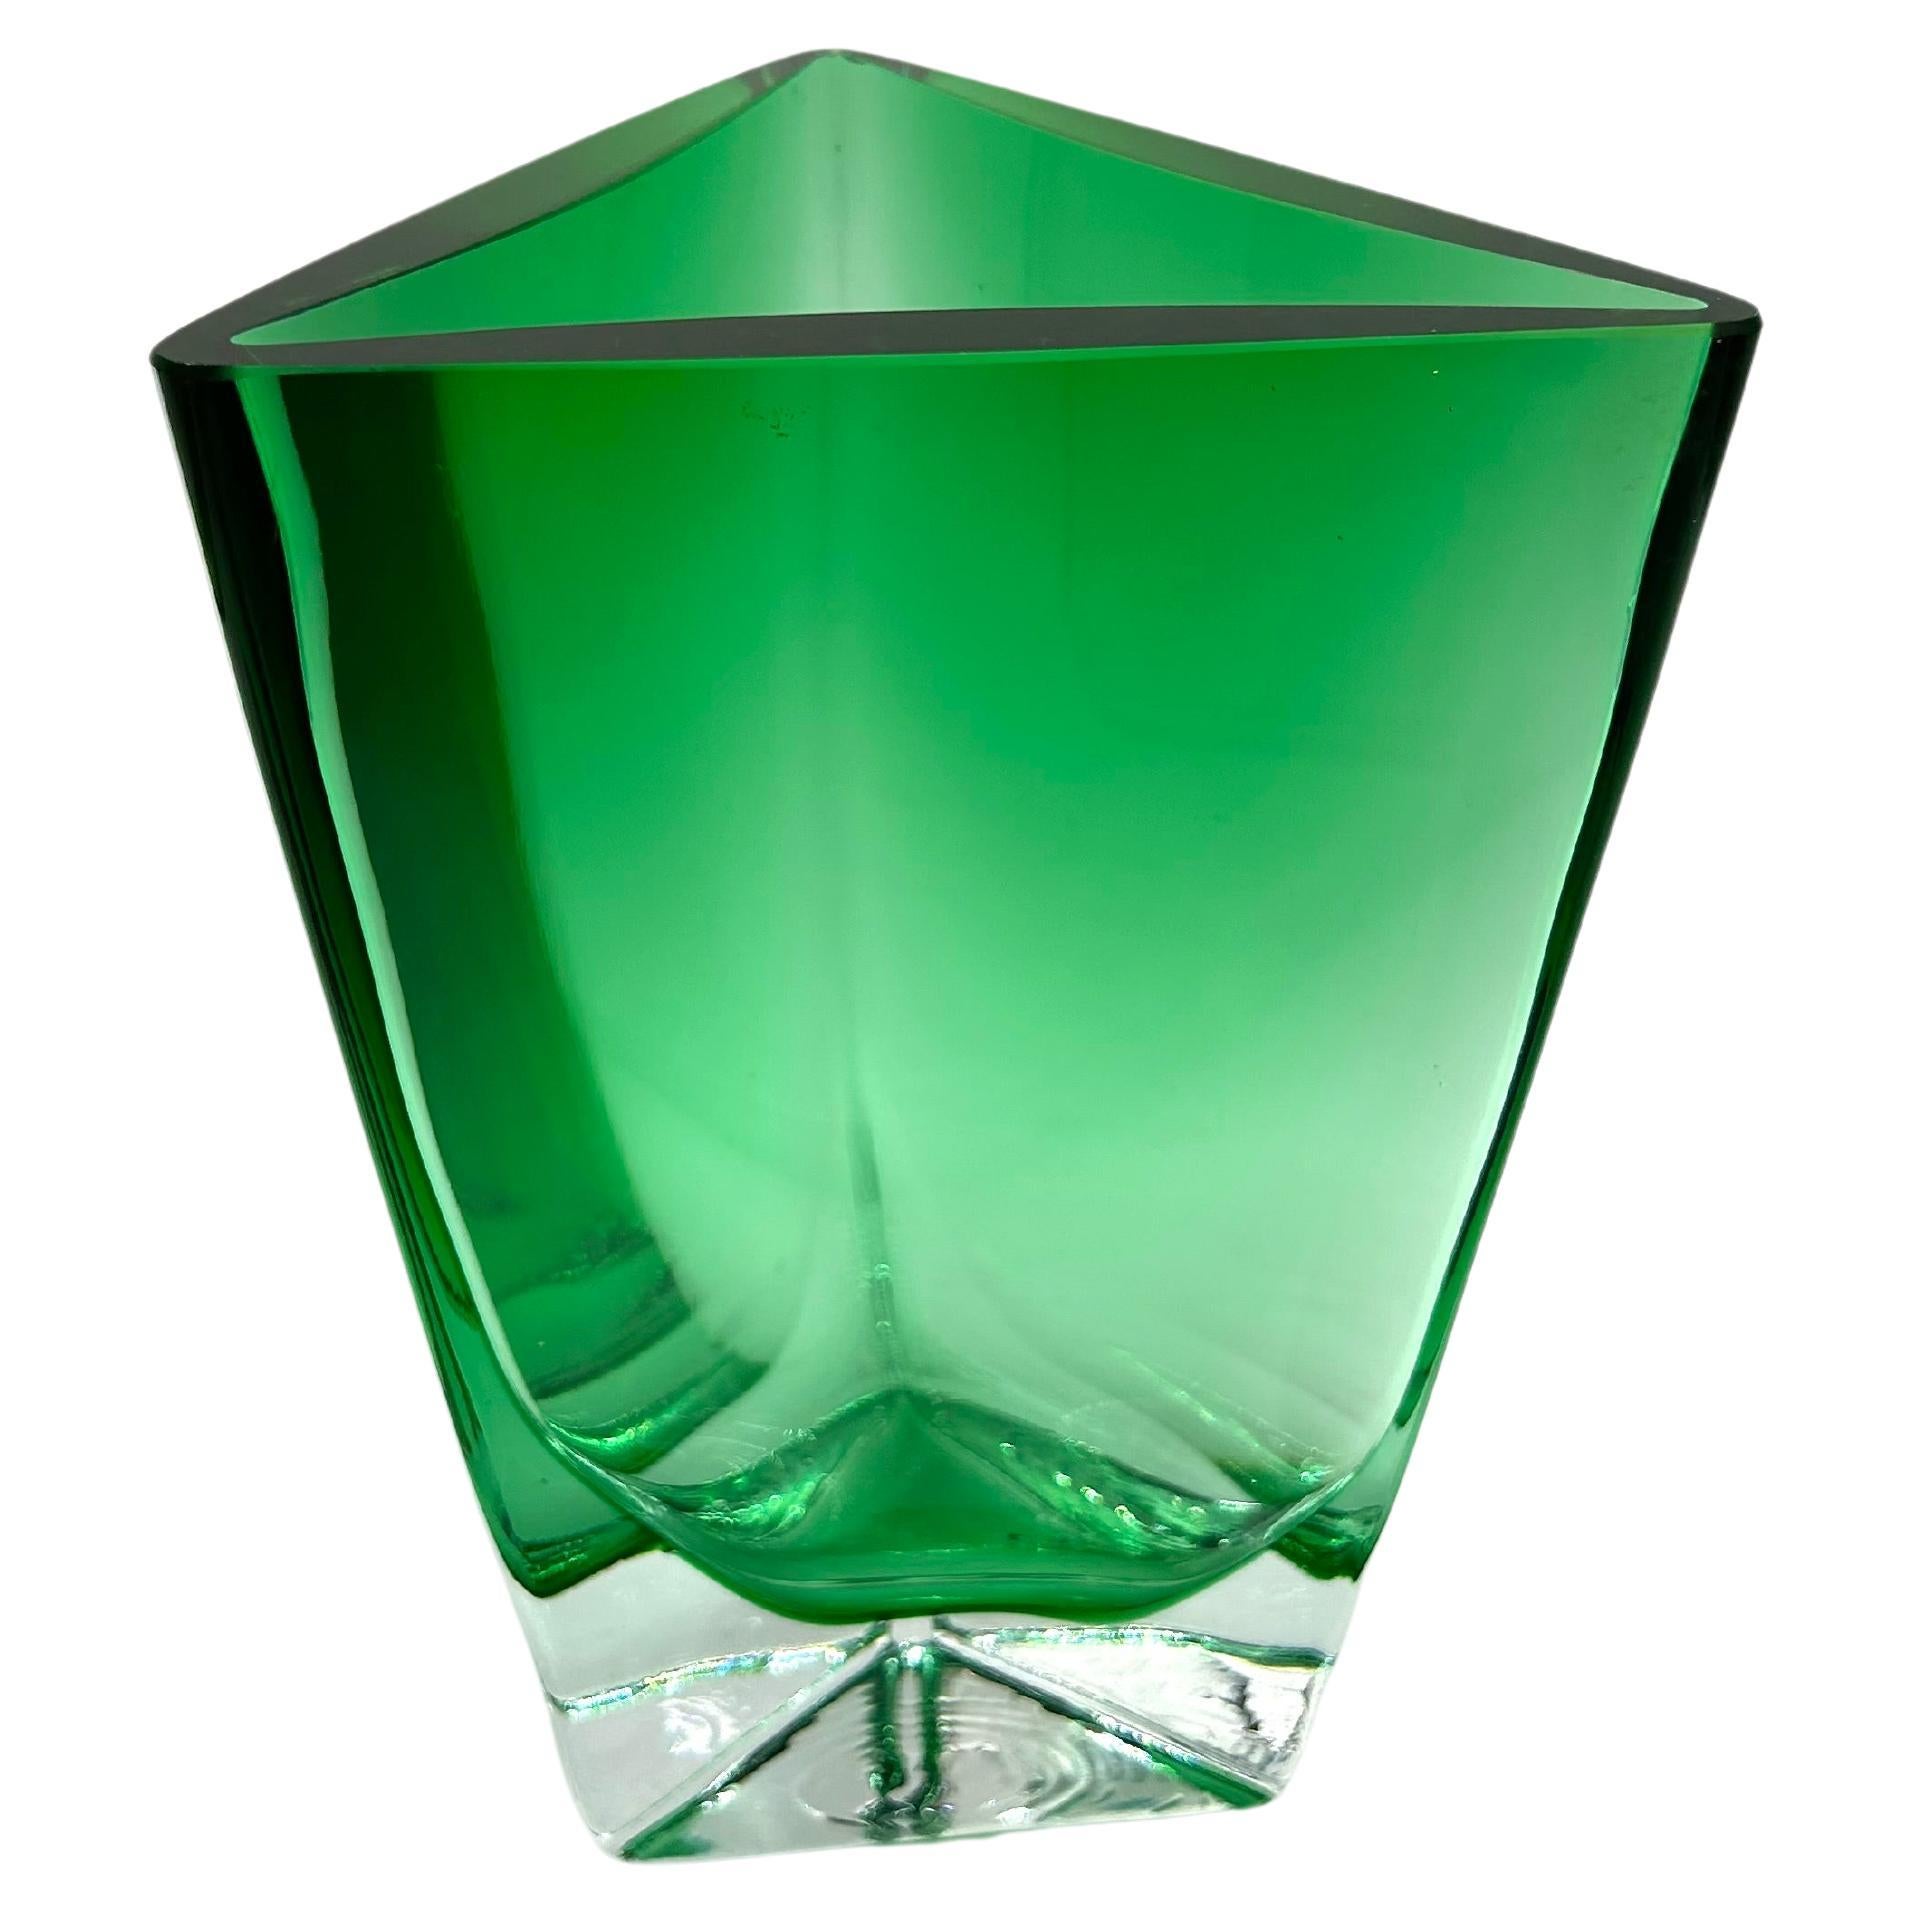 Triangular Green Vase, Glassworks Krosno, Poland